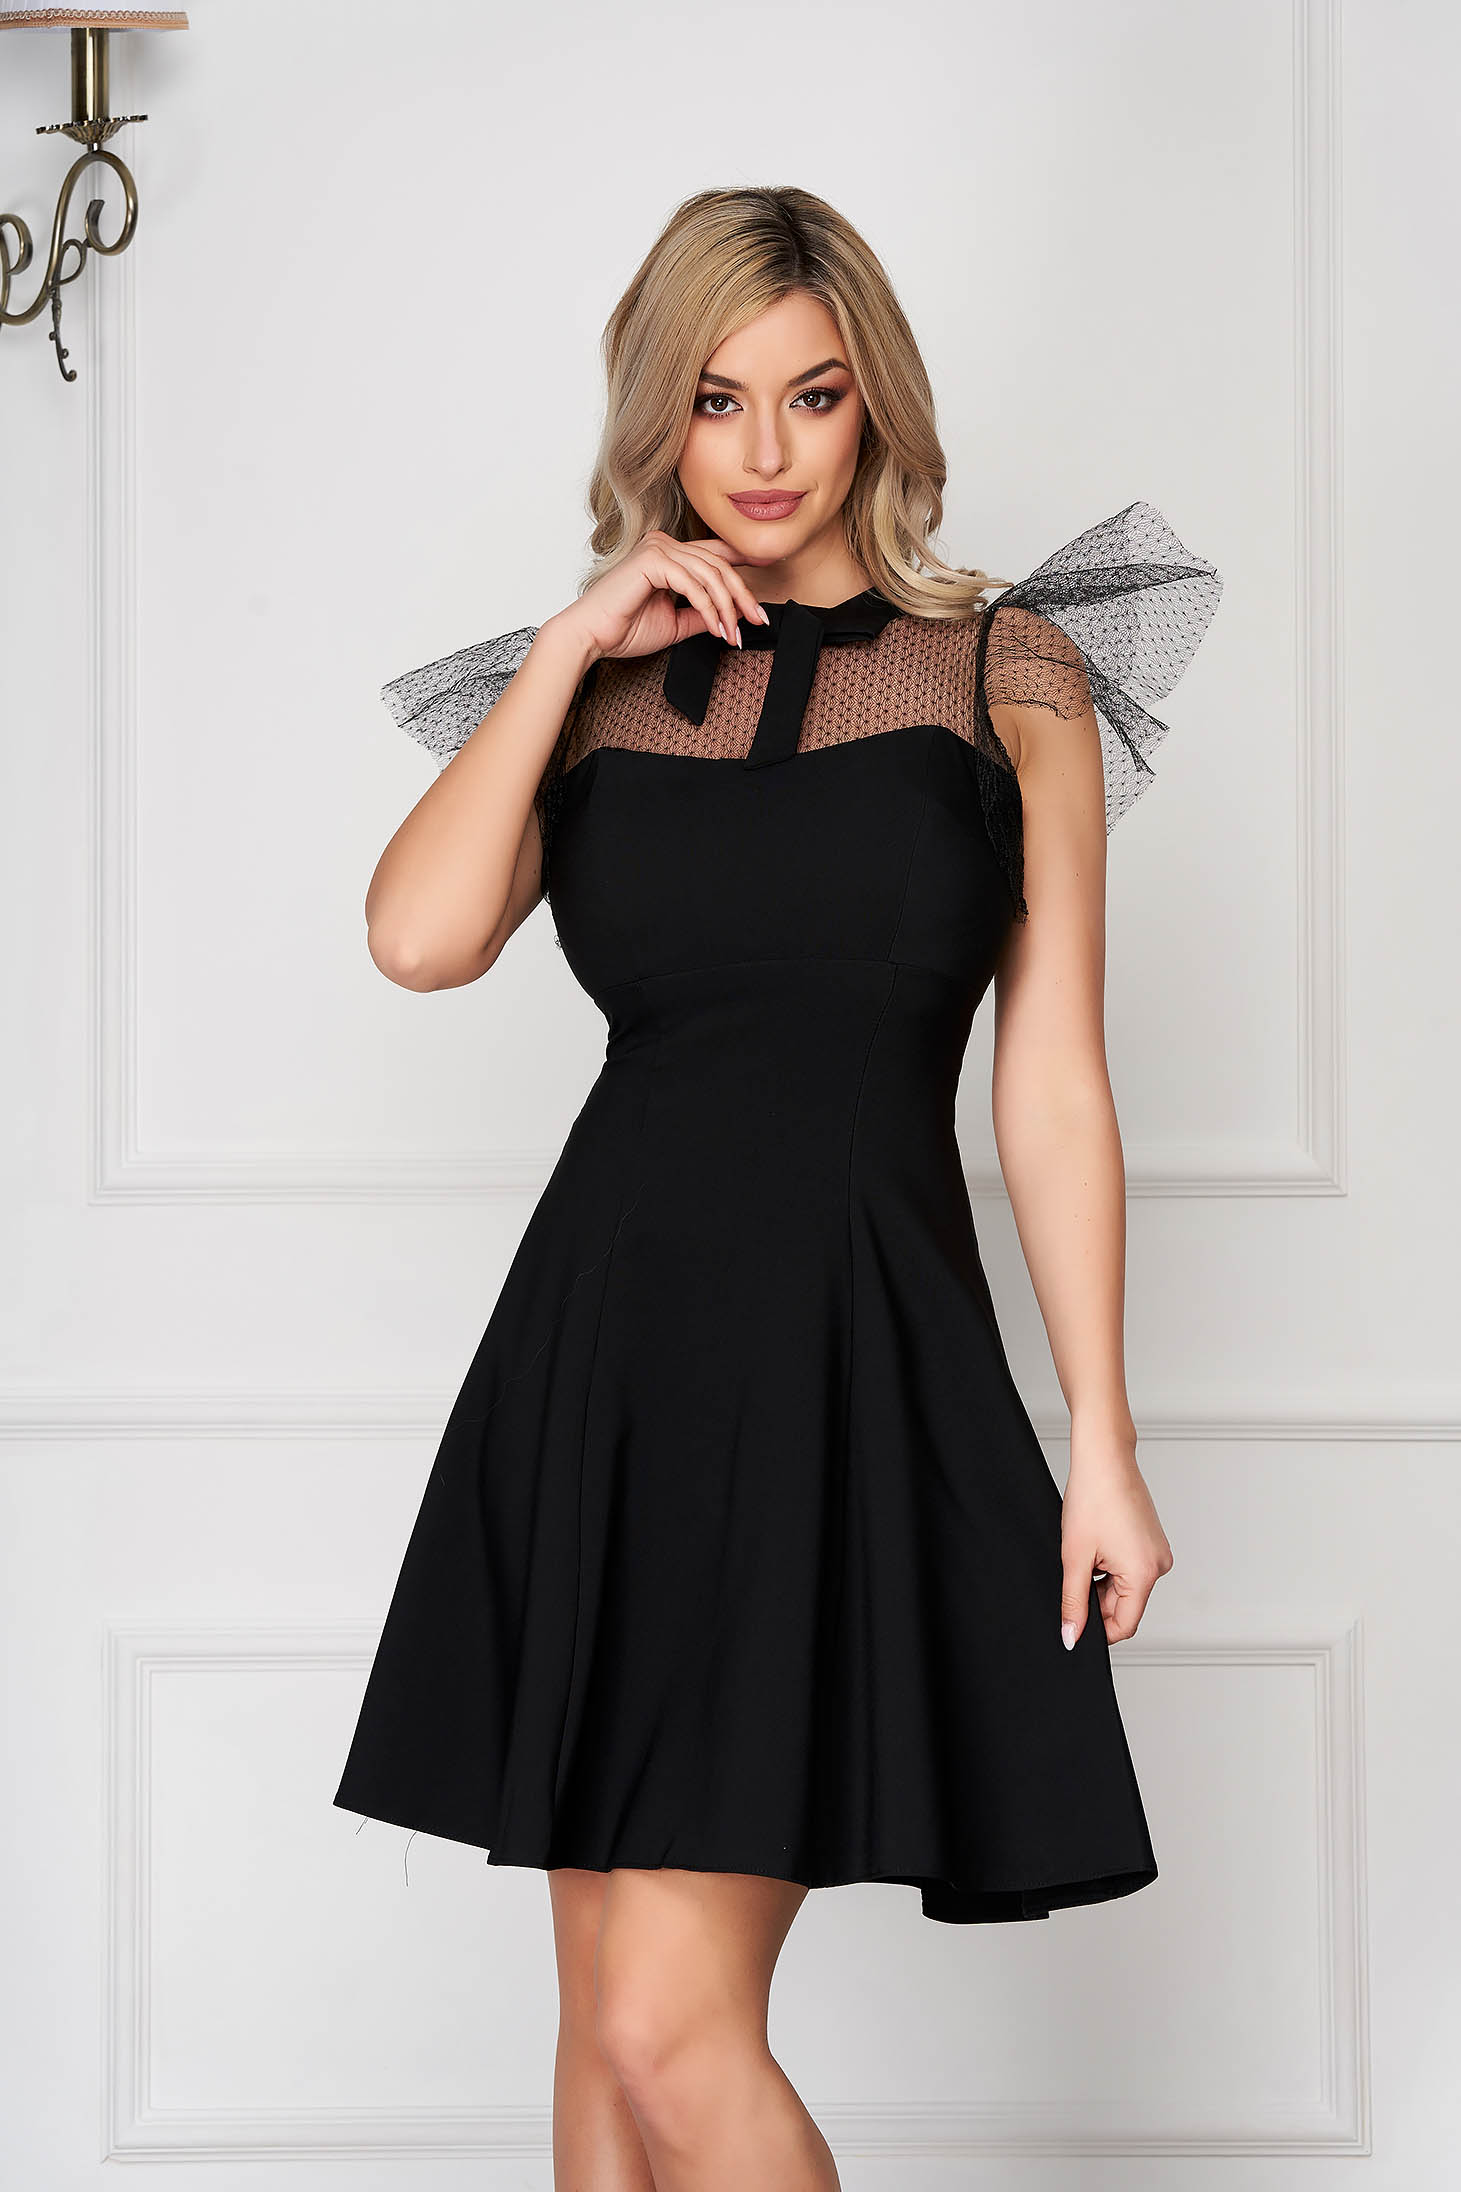 Sheer Net Hot Black Babydoll Bikini Night Dress for Honeymoon K11K –  Klamotten